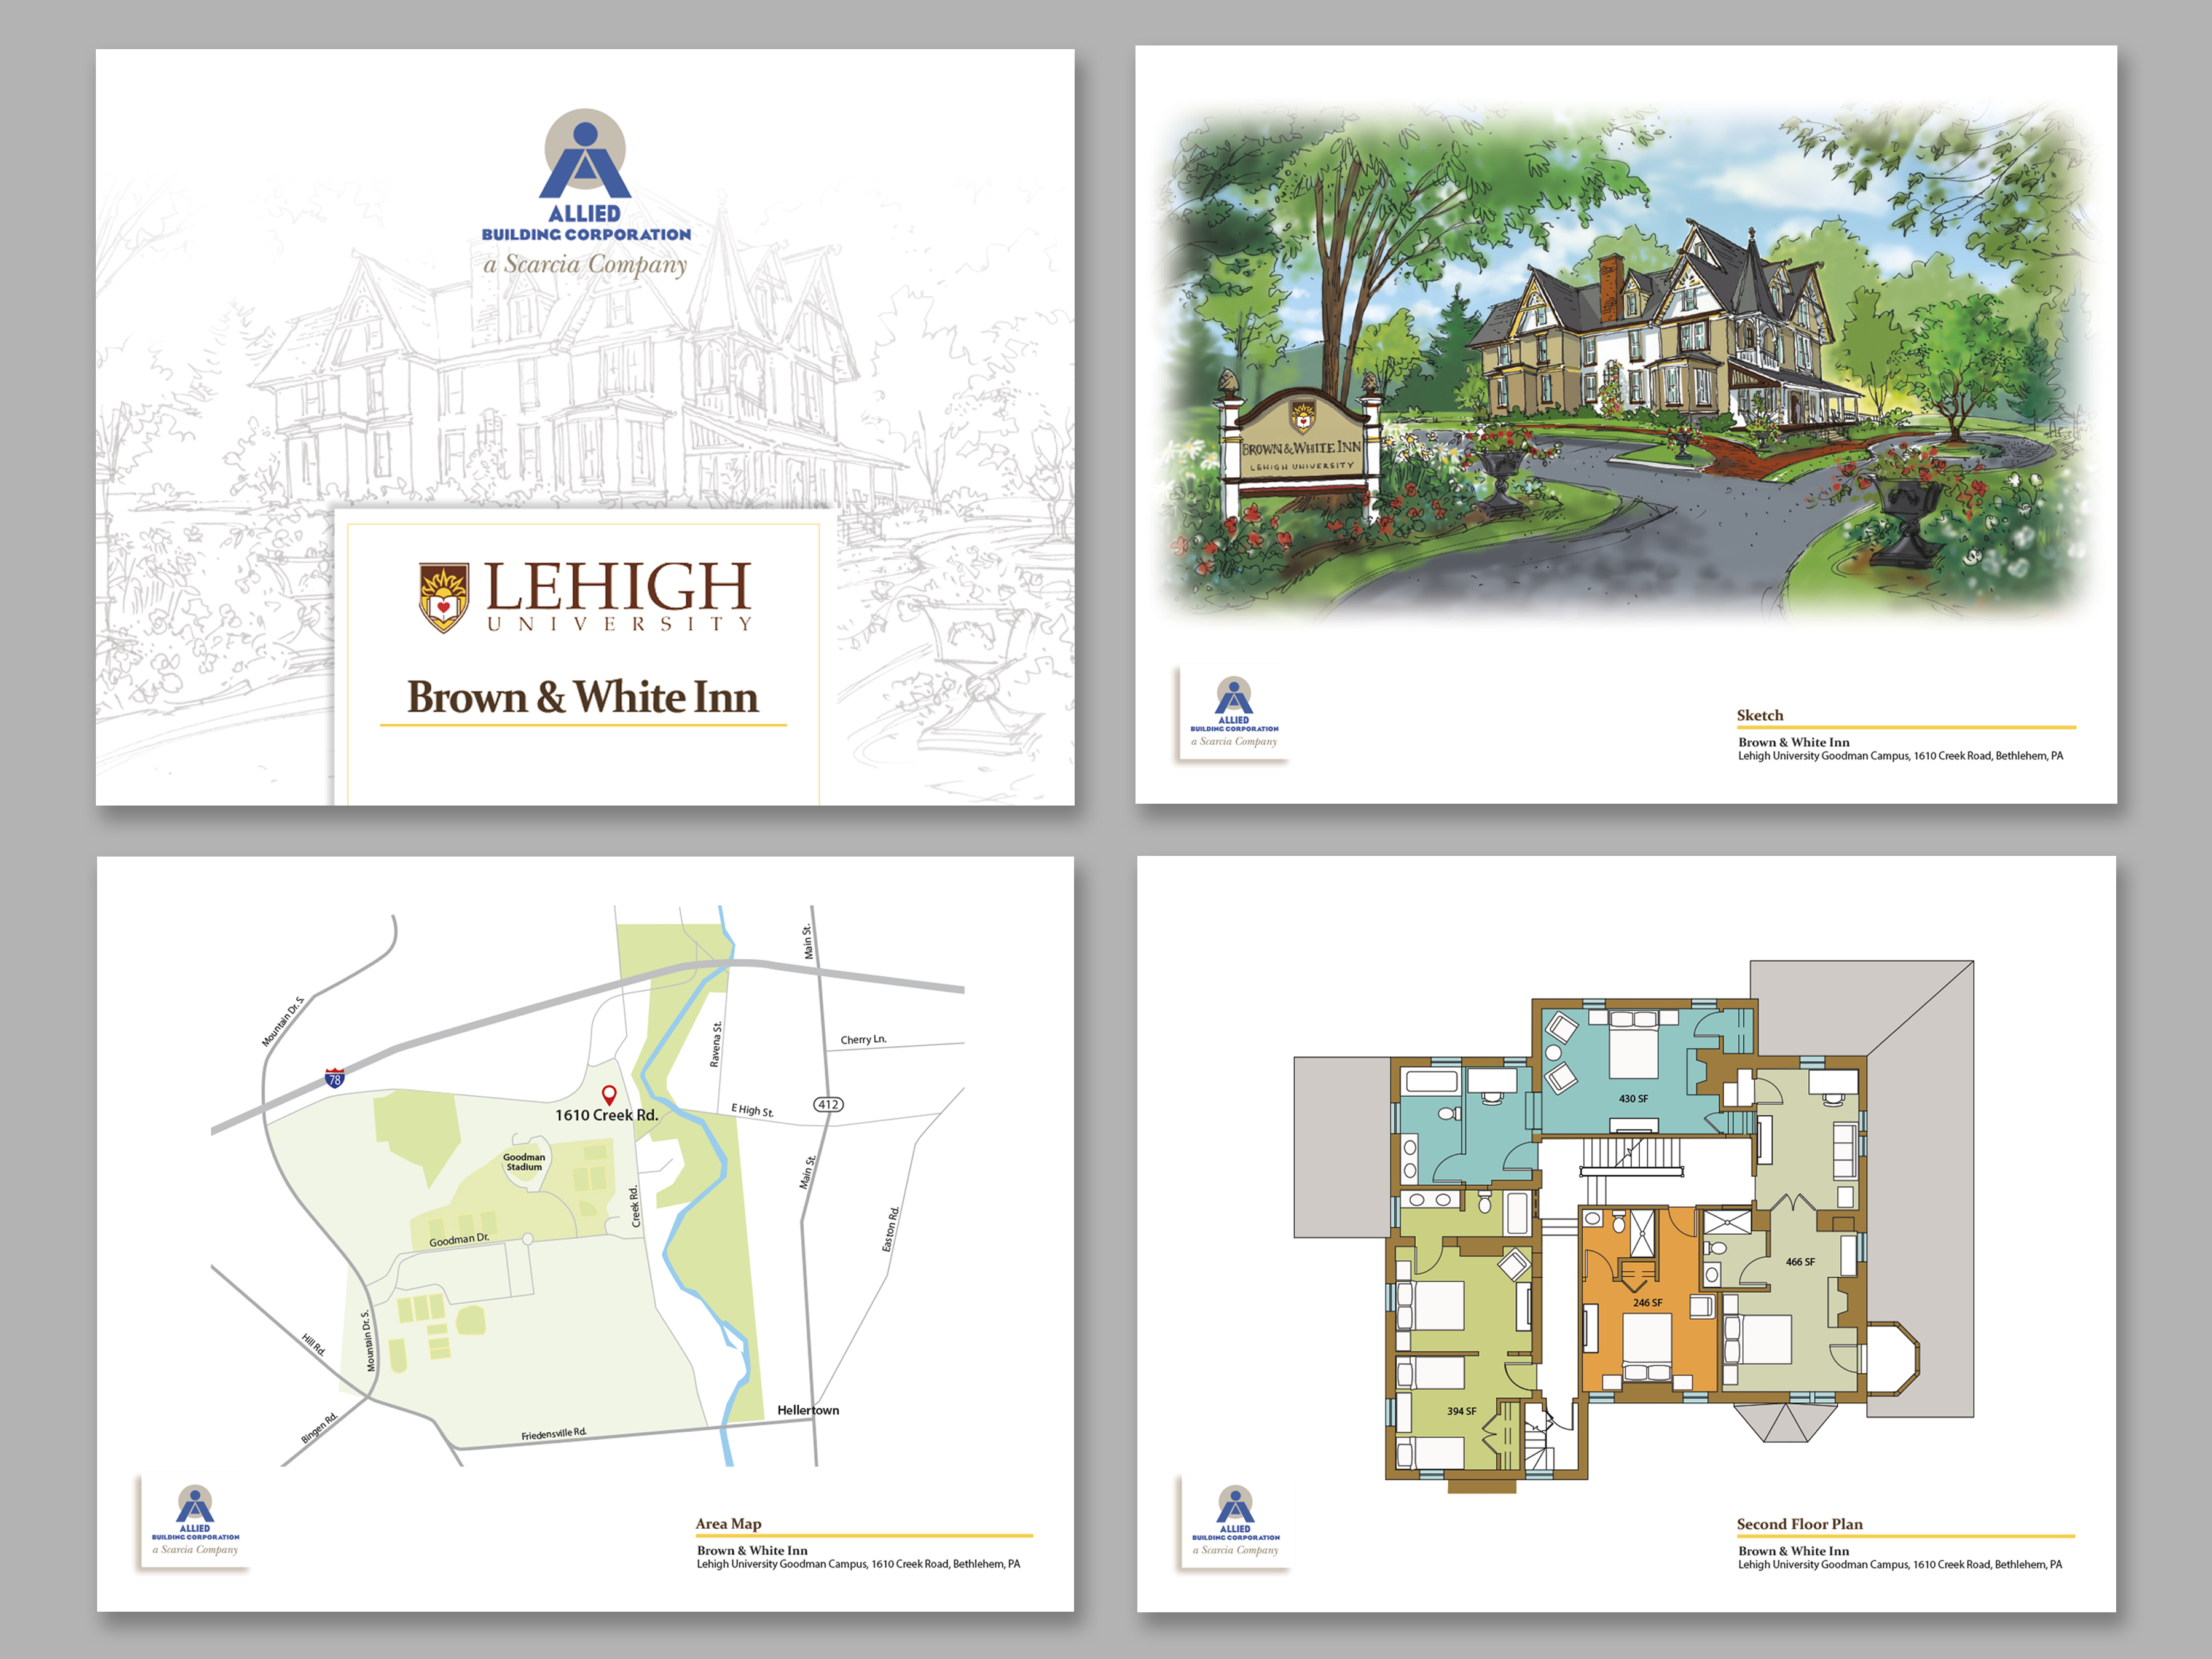 Allied Building Corp. Lehigh University-Brown & White Inn Proposal